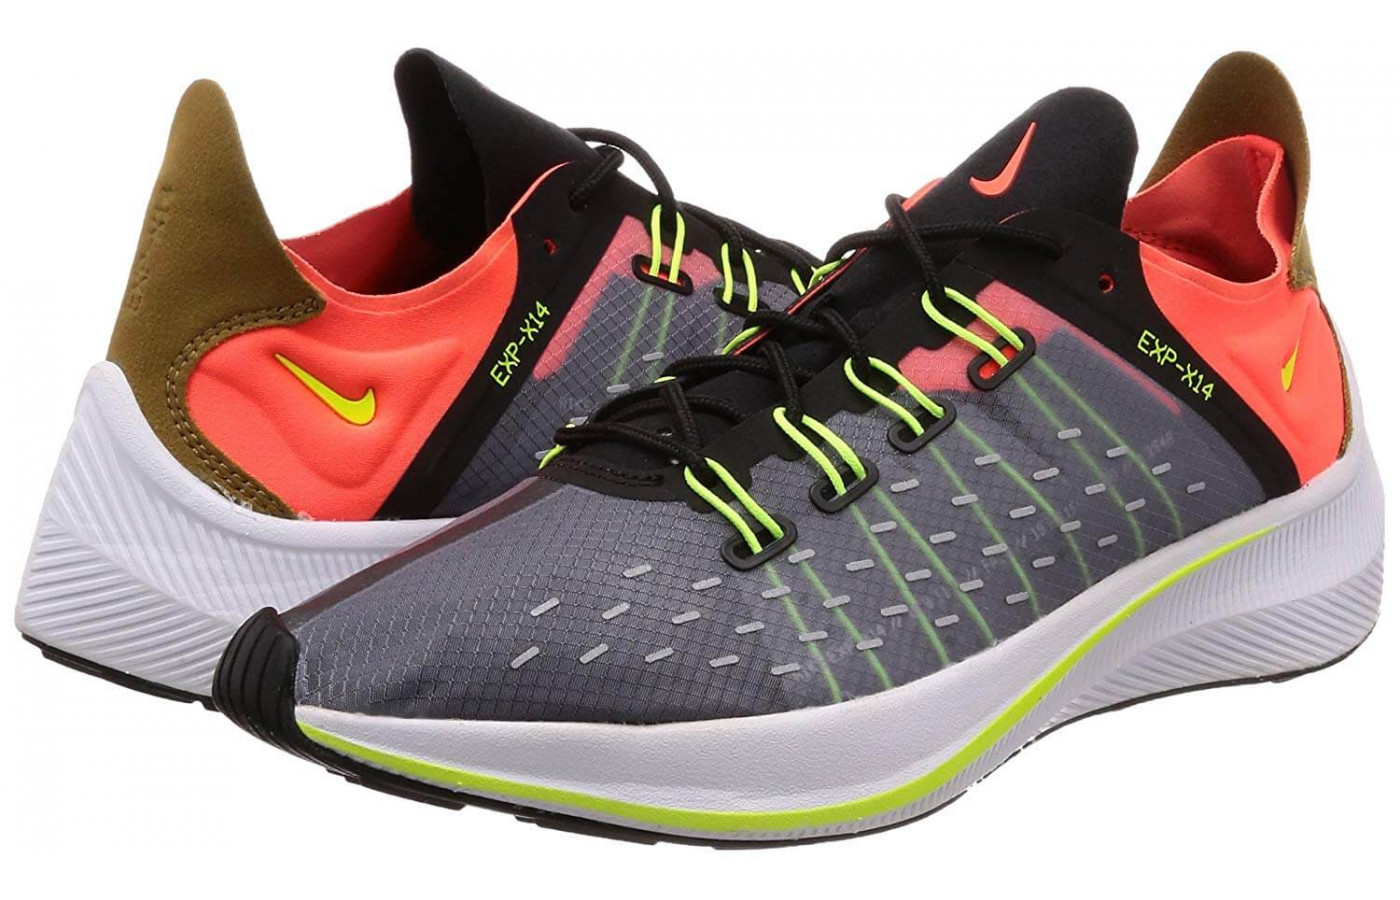 Nike EXP-X14 pair